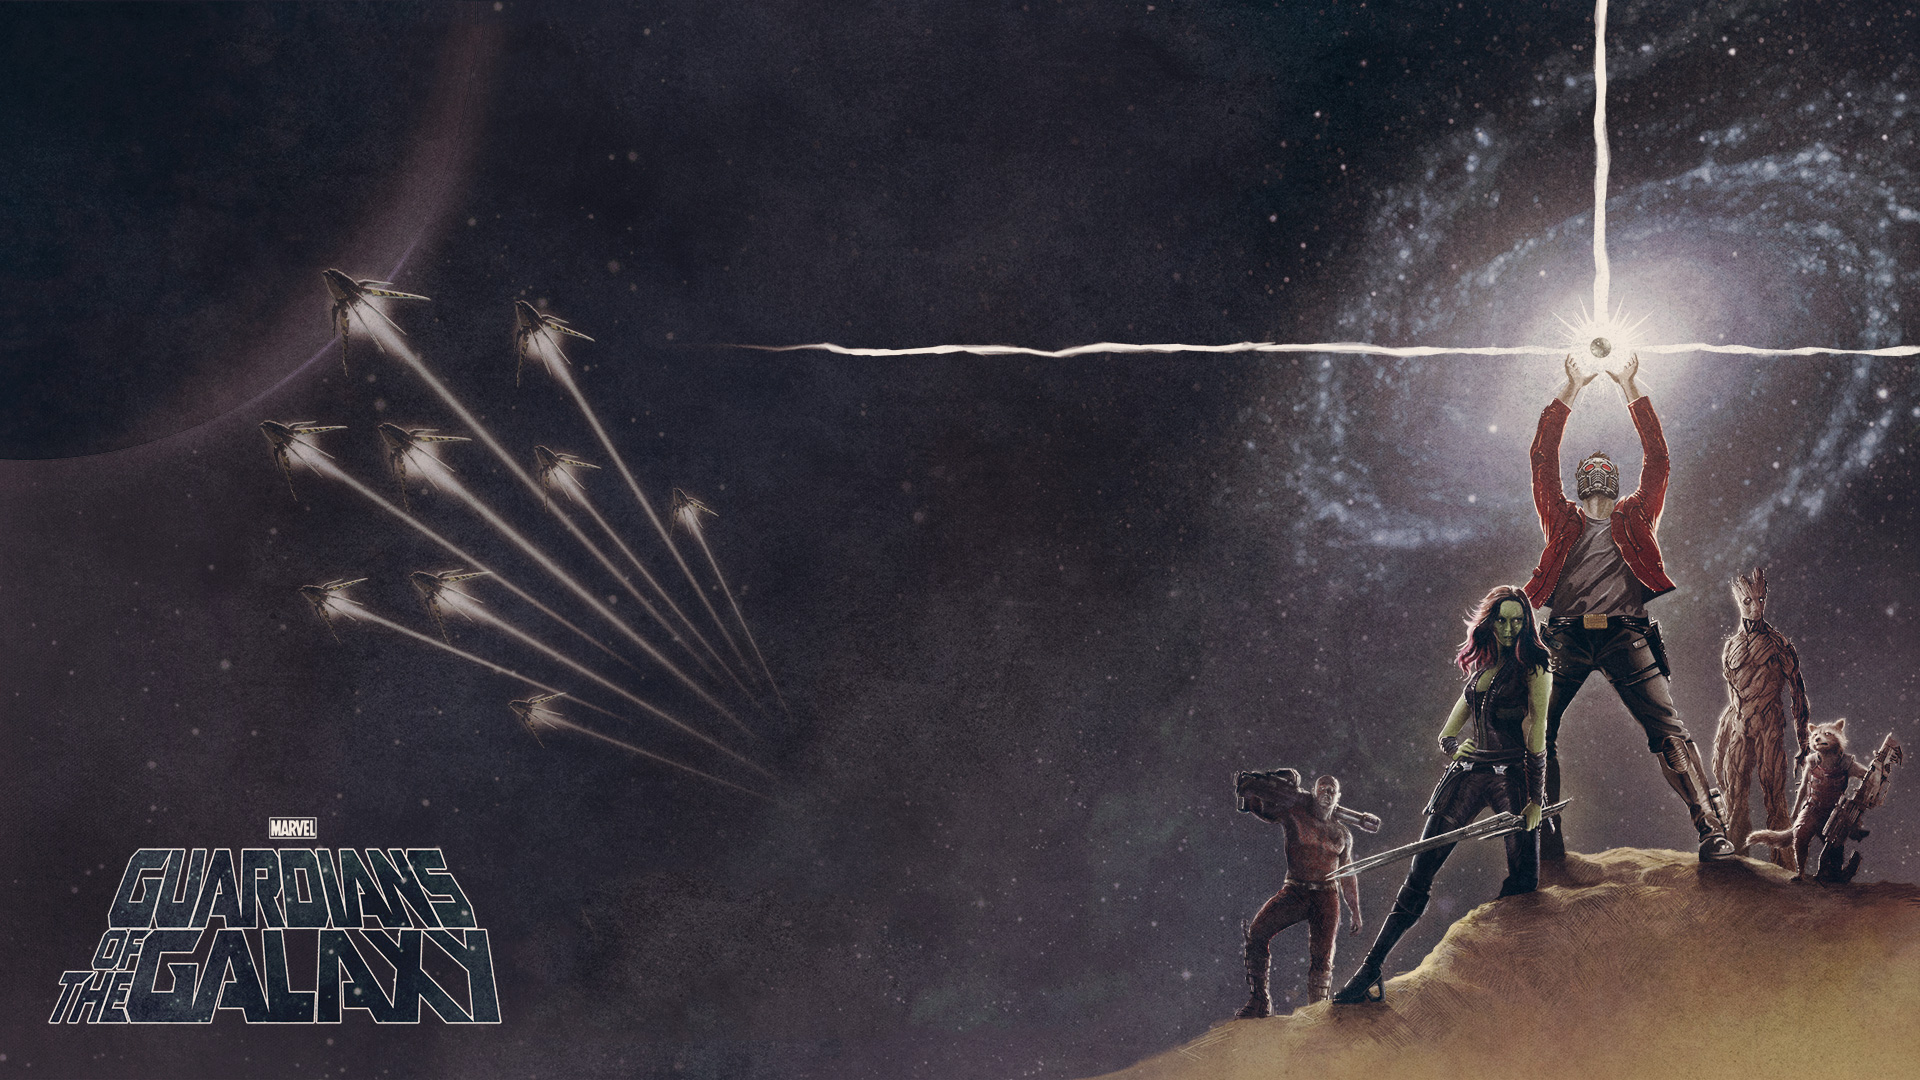 Guardians of the Galaxy HD Wallpaper by Matt Ferguson